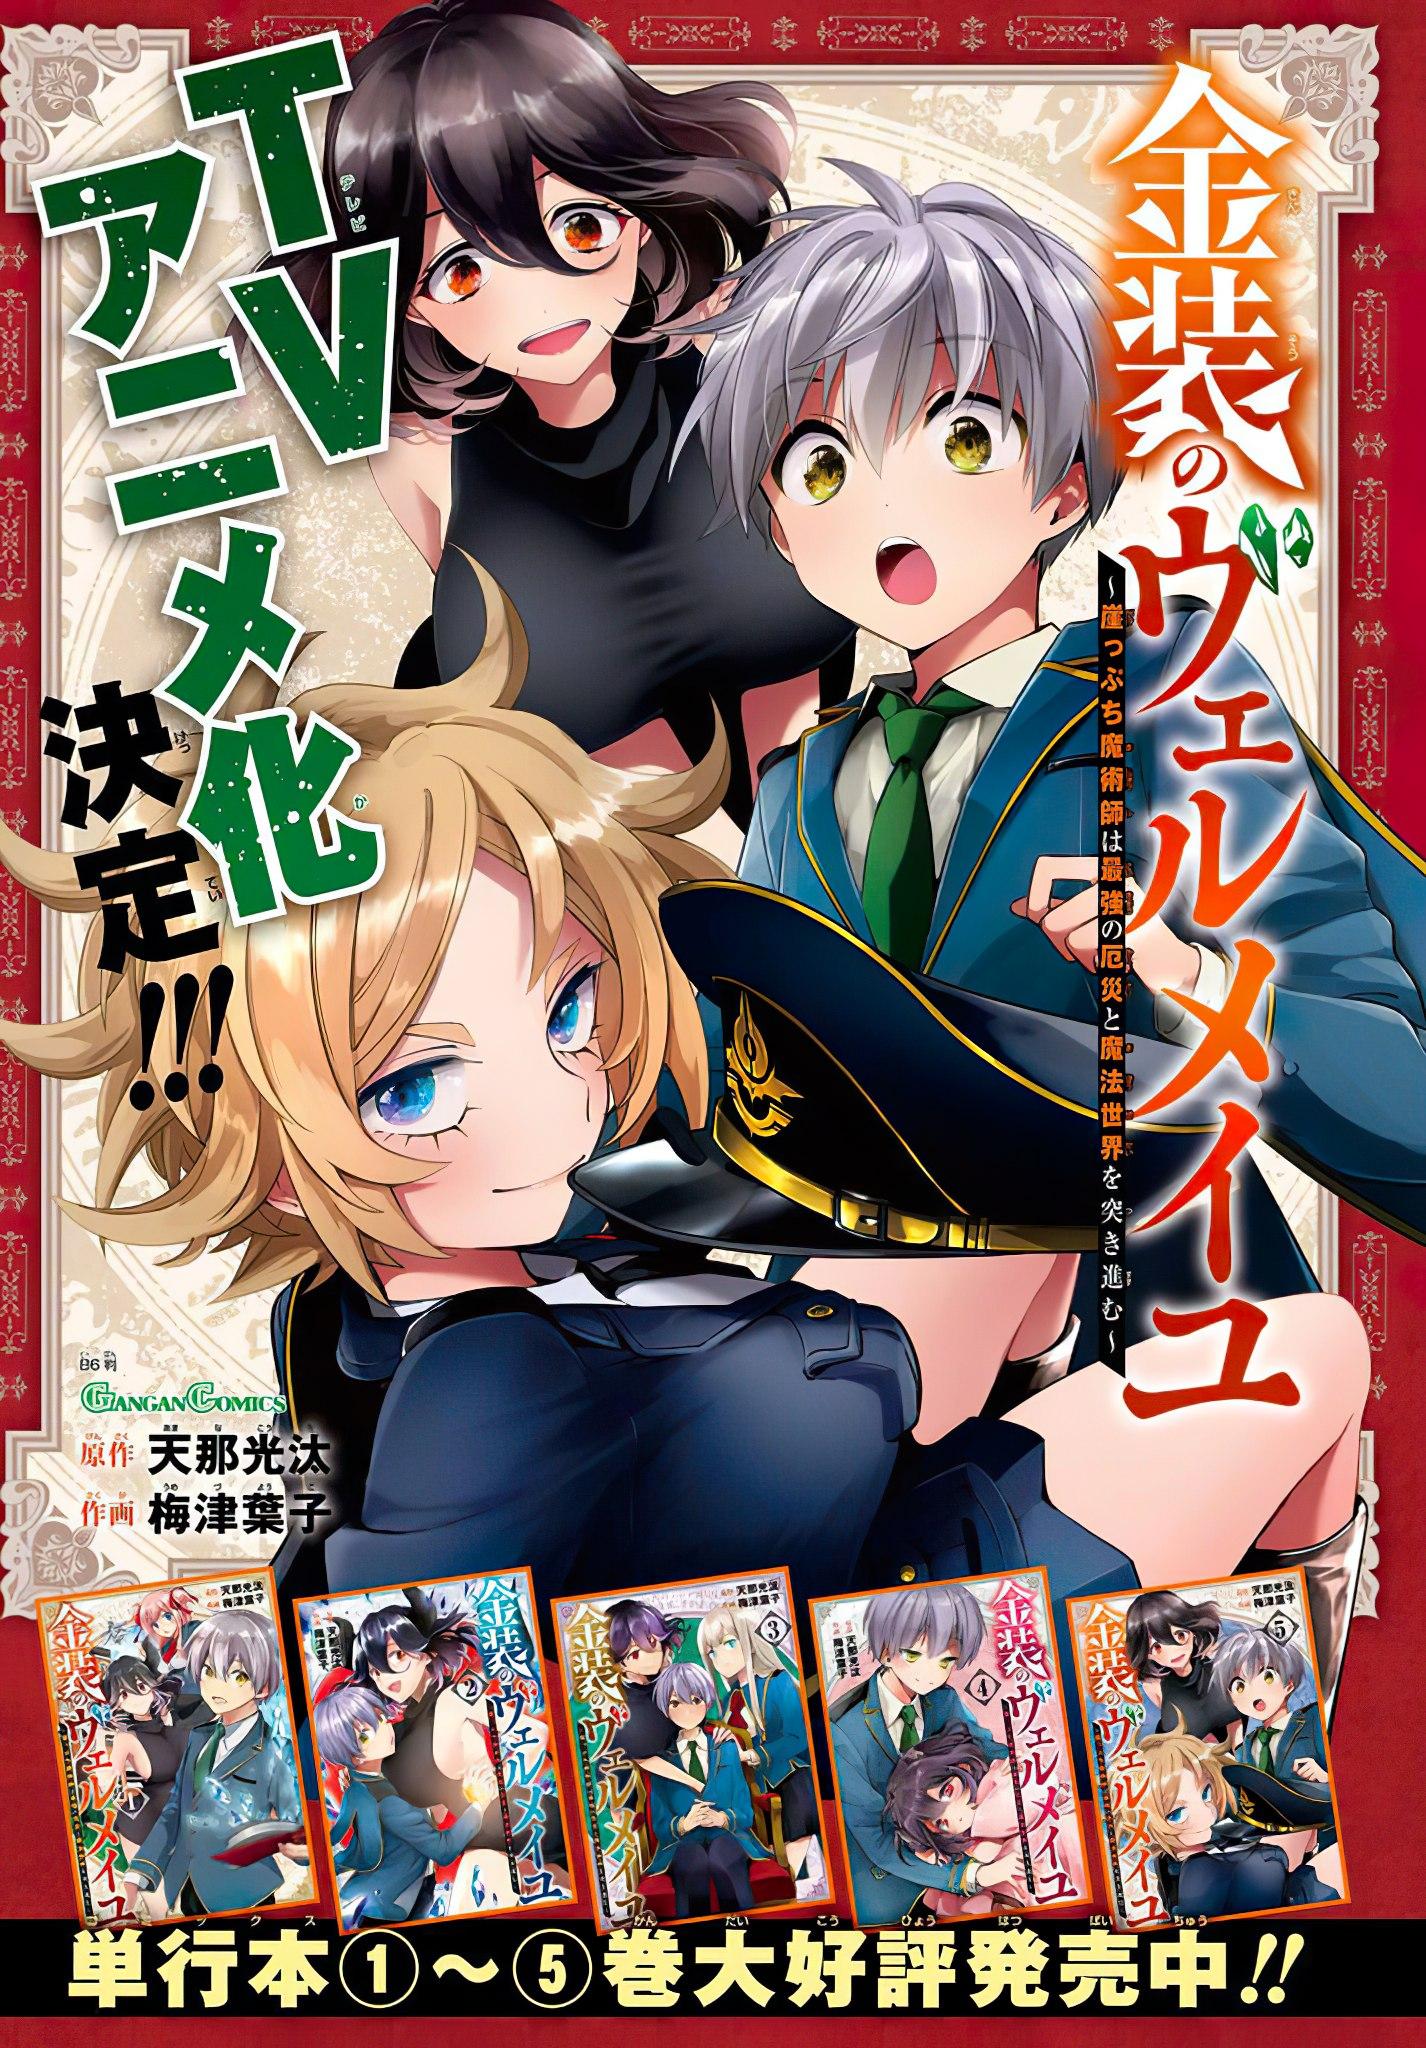 ▷ Kinsou no Vermeil ecchi manga is getting an anime adaptation 〜 Anime  Sweet 💕